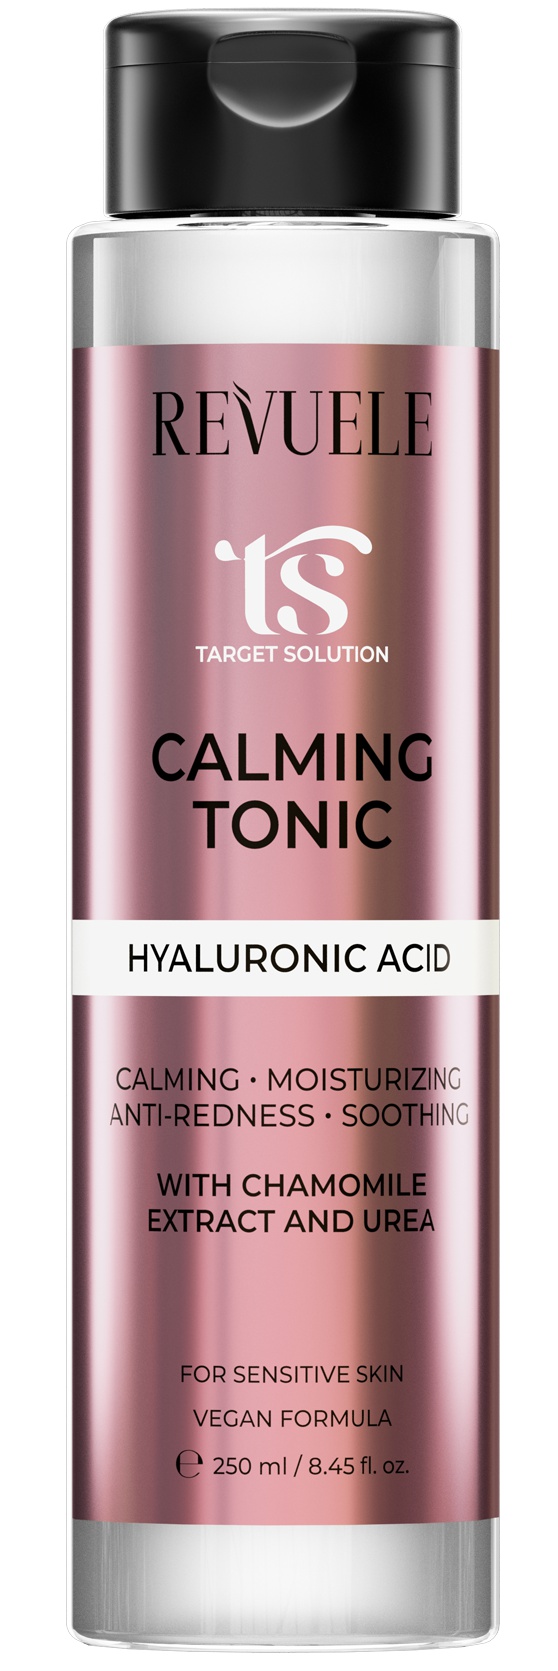 Revuele TS Calming Tonic Hyaluronic Acid